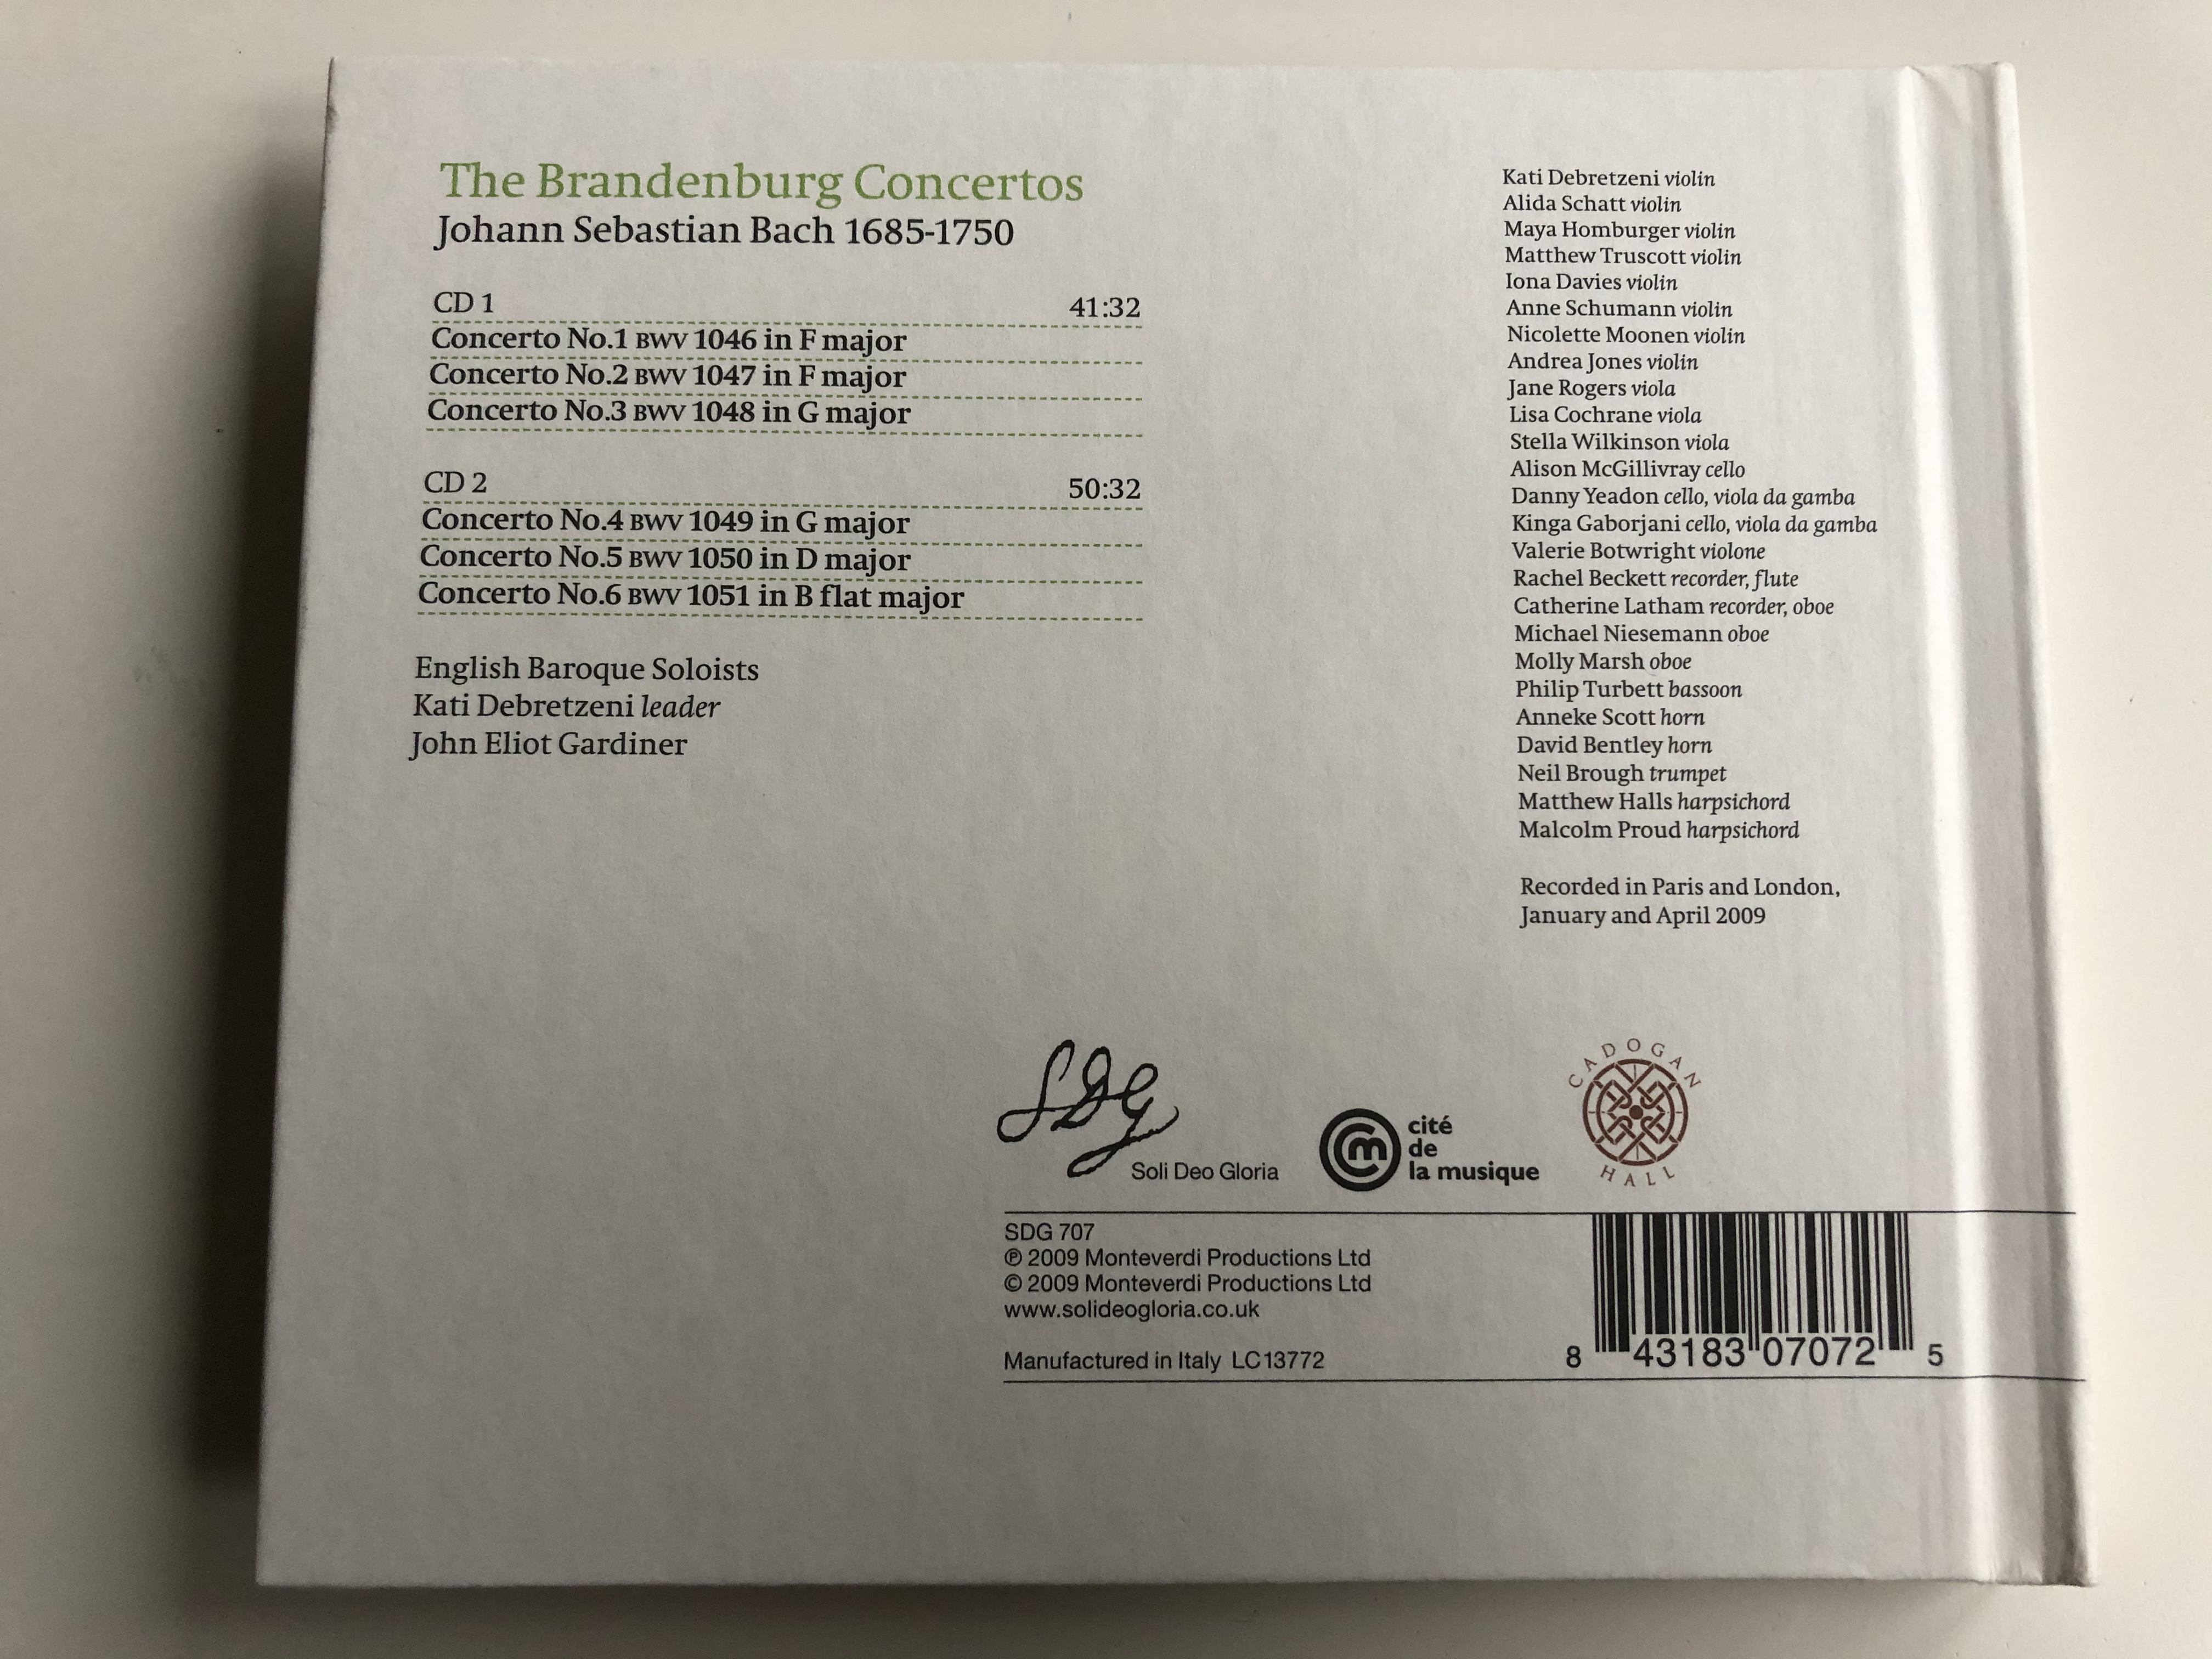 bach-brandenburg-concertos-english-baroque-soloists-kati-debretzeni-john-eliot-gardiner-soli-deo-gloria-2x-audio-cd-2009-sdg-707-8-.jpg